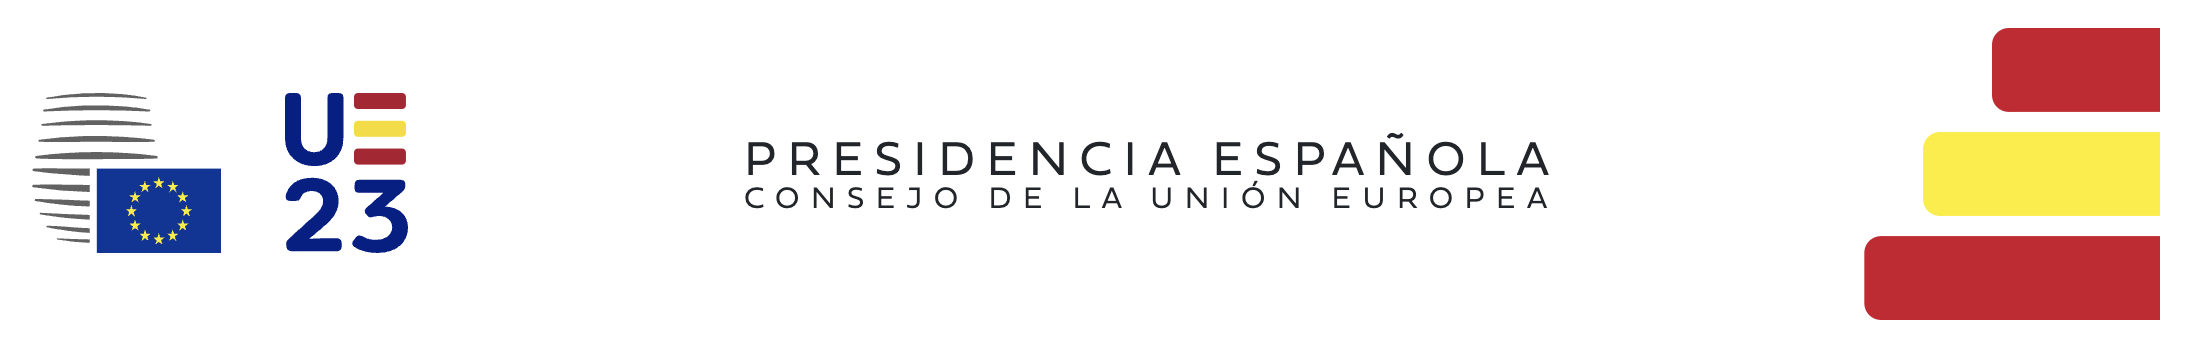 Presidencia Española Consejo EU 2023